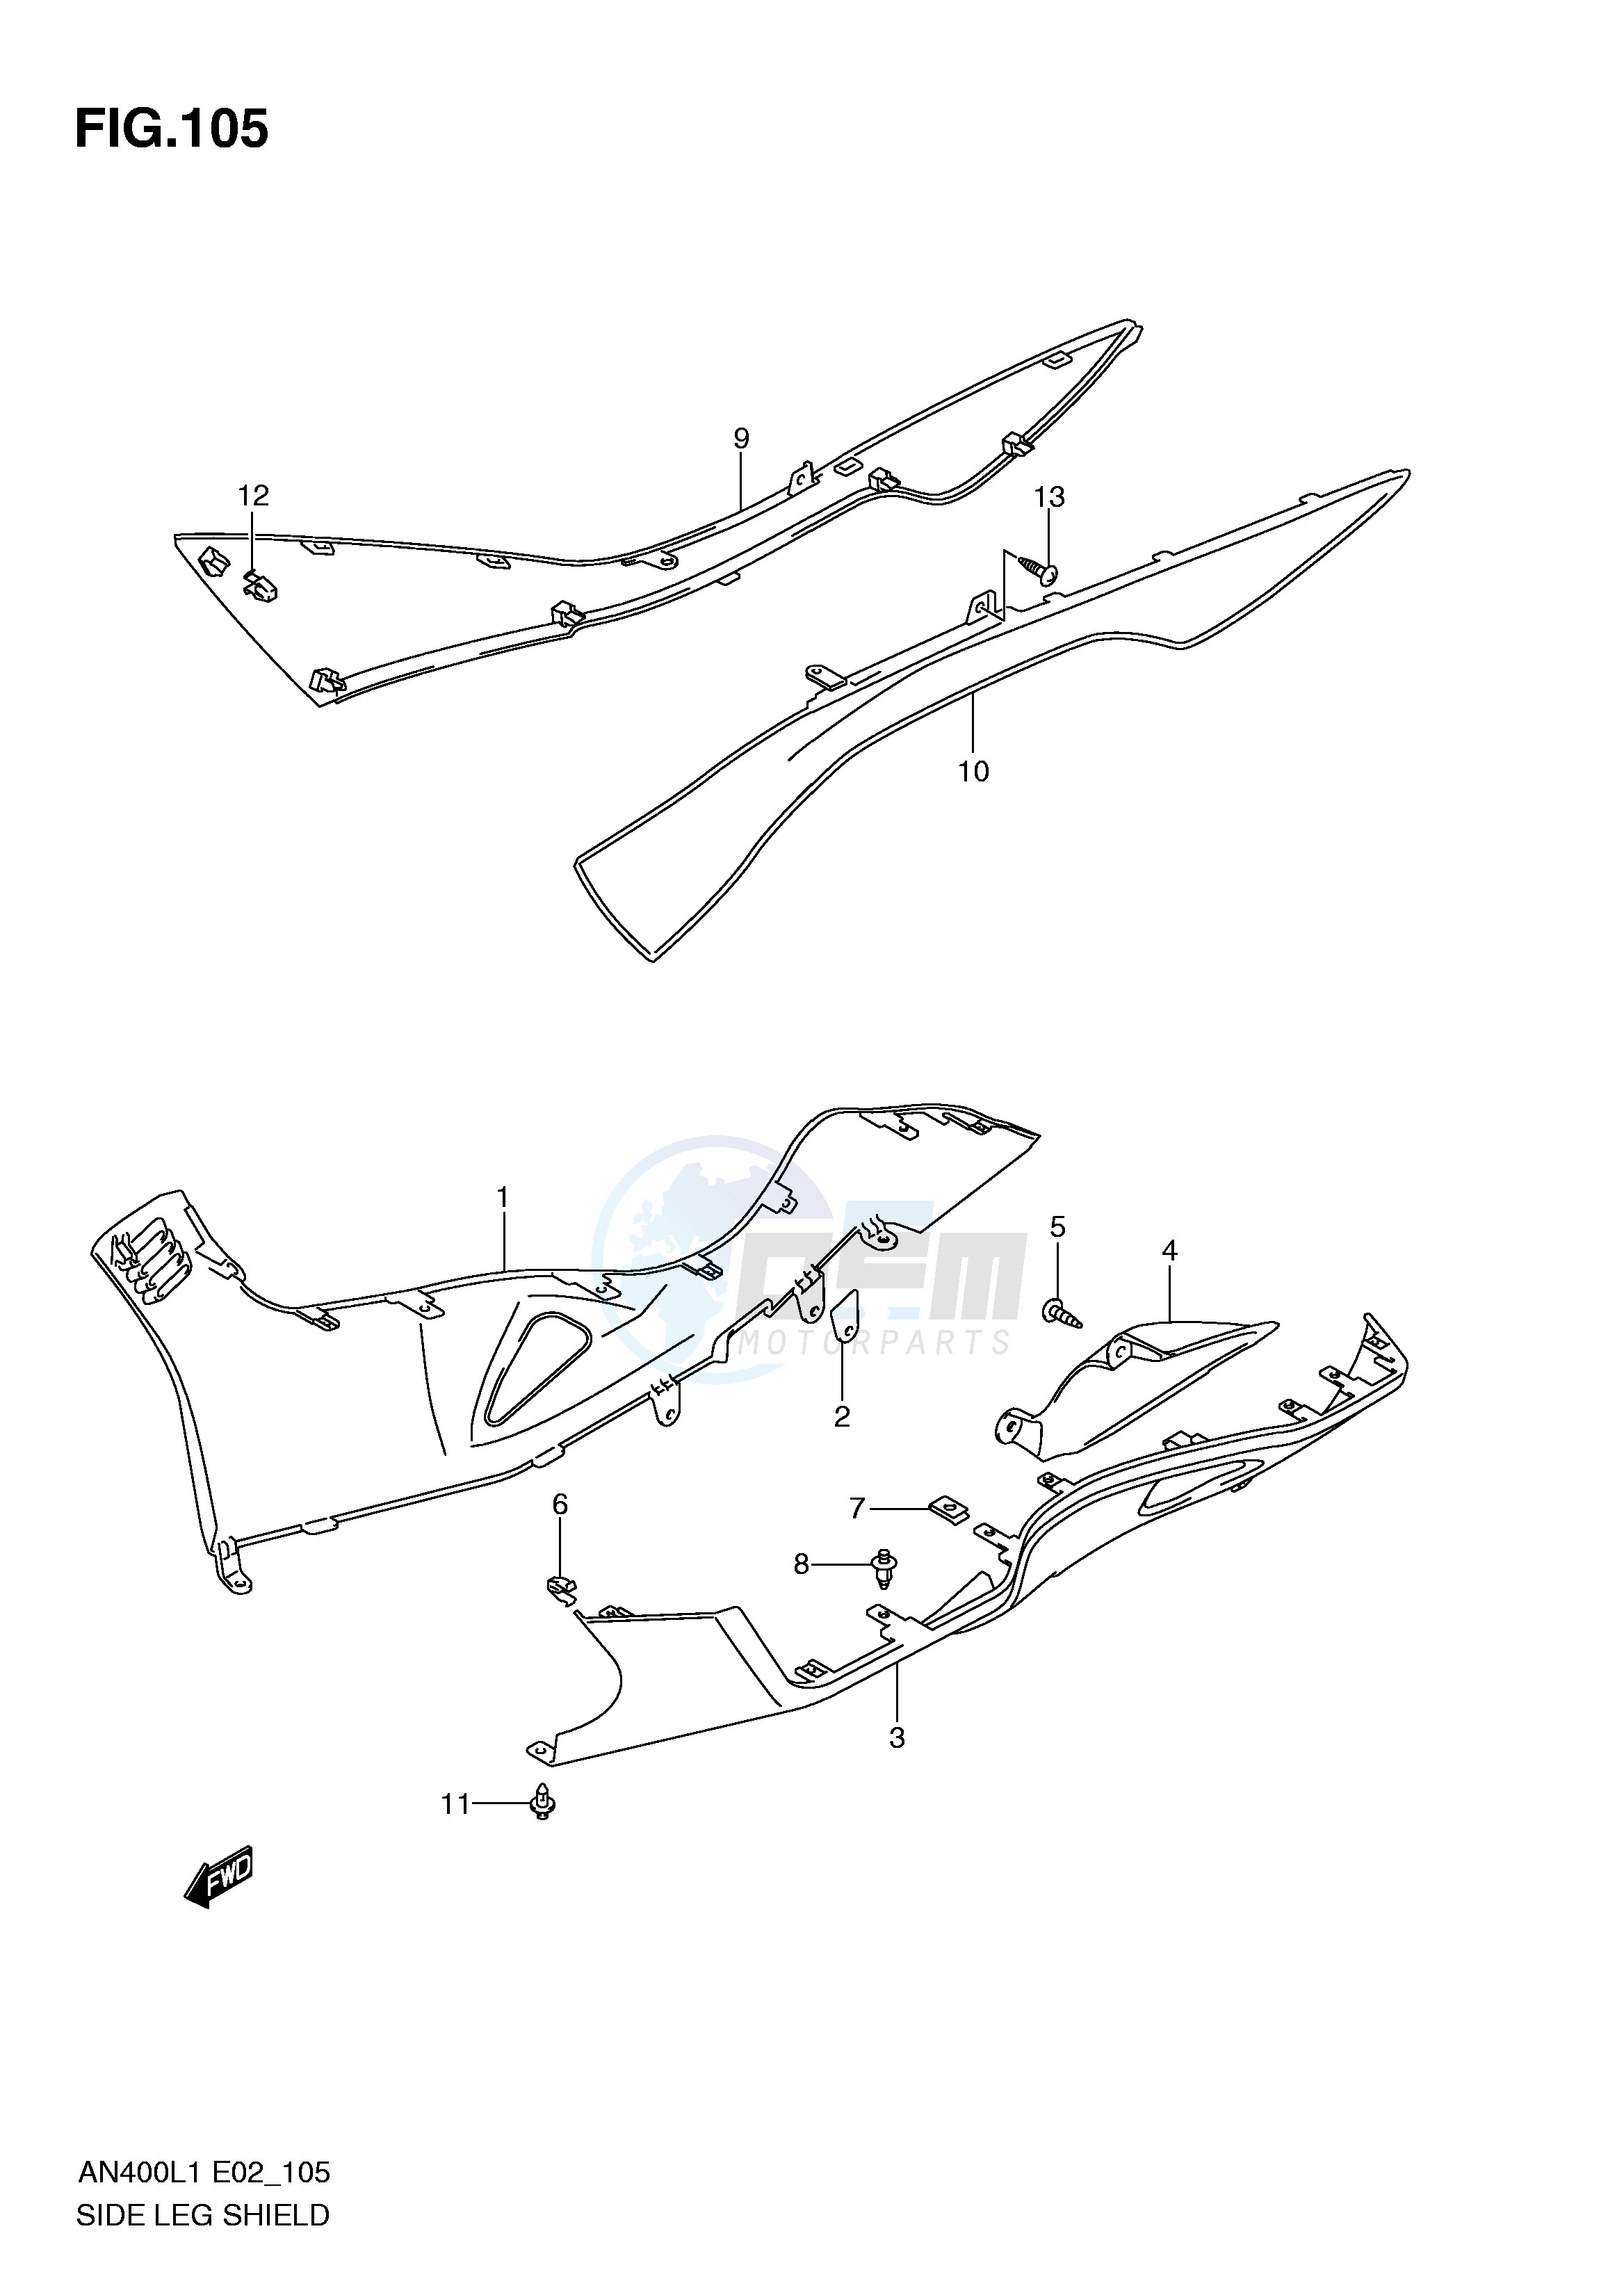 SIDE LEG SHIELD (AN400ZAL1 E2) blueprint